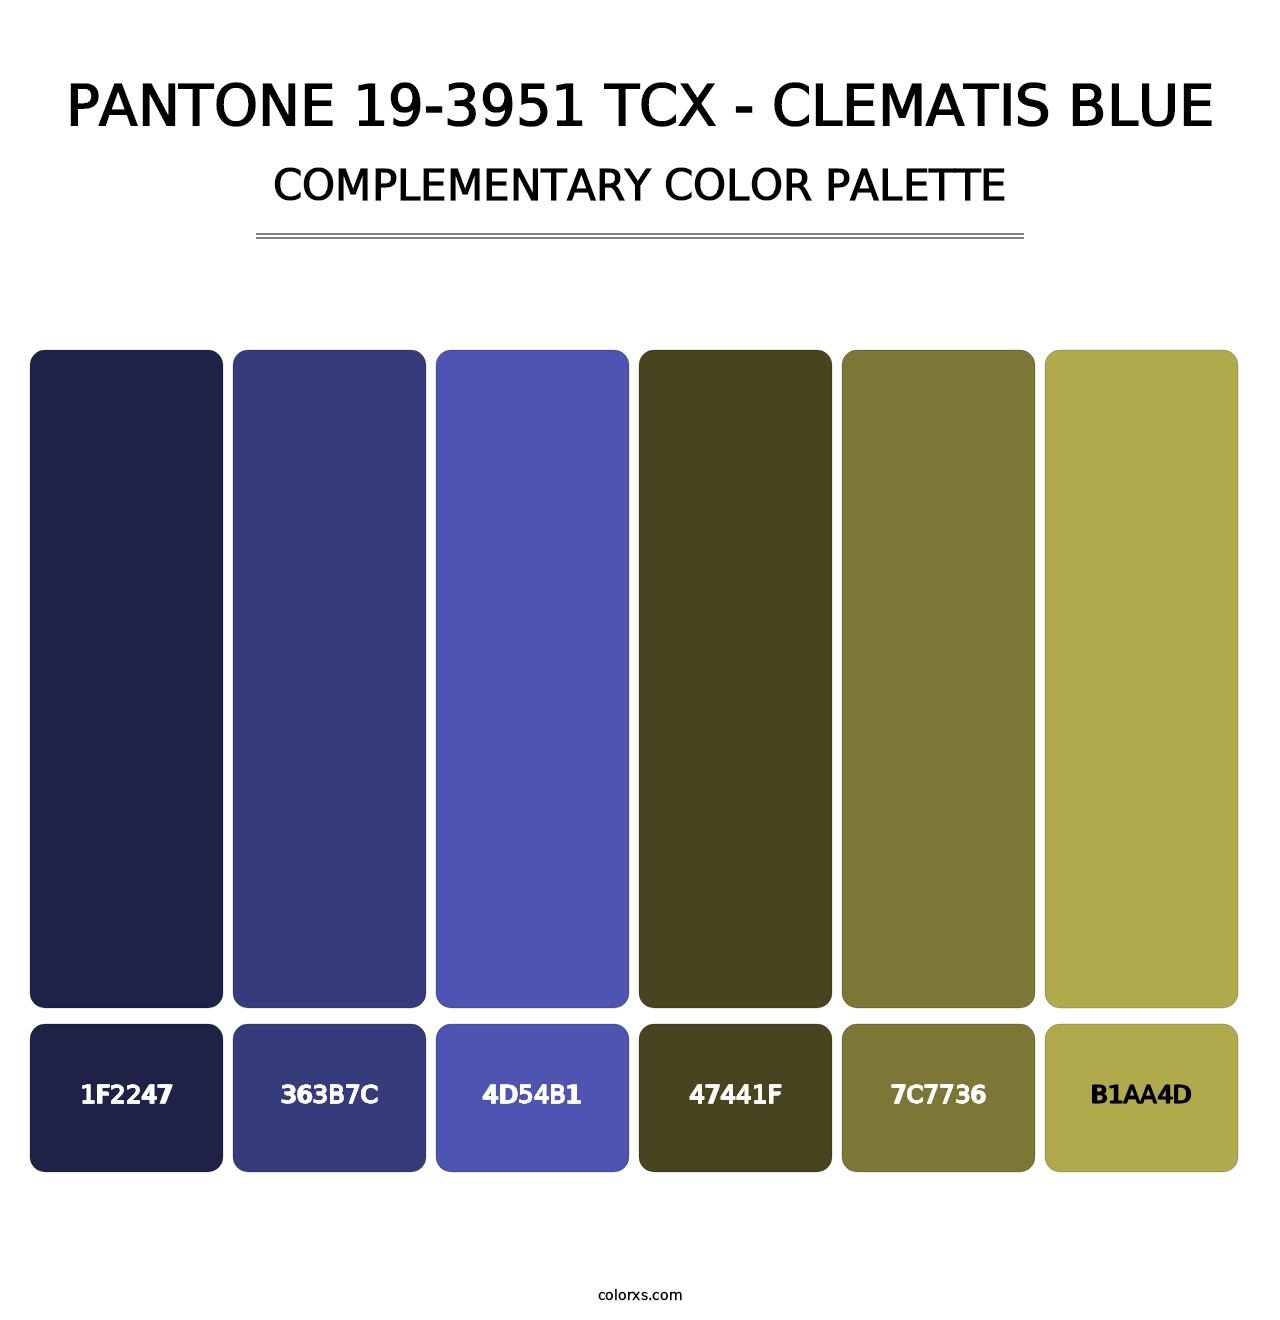 PANTONE 19-3951 TCX - Clematis Blue - Complementary Color Palette